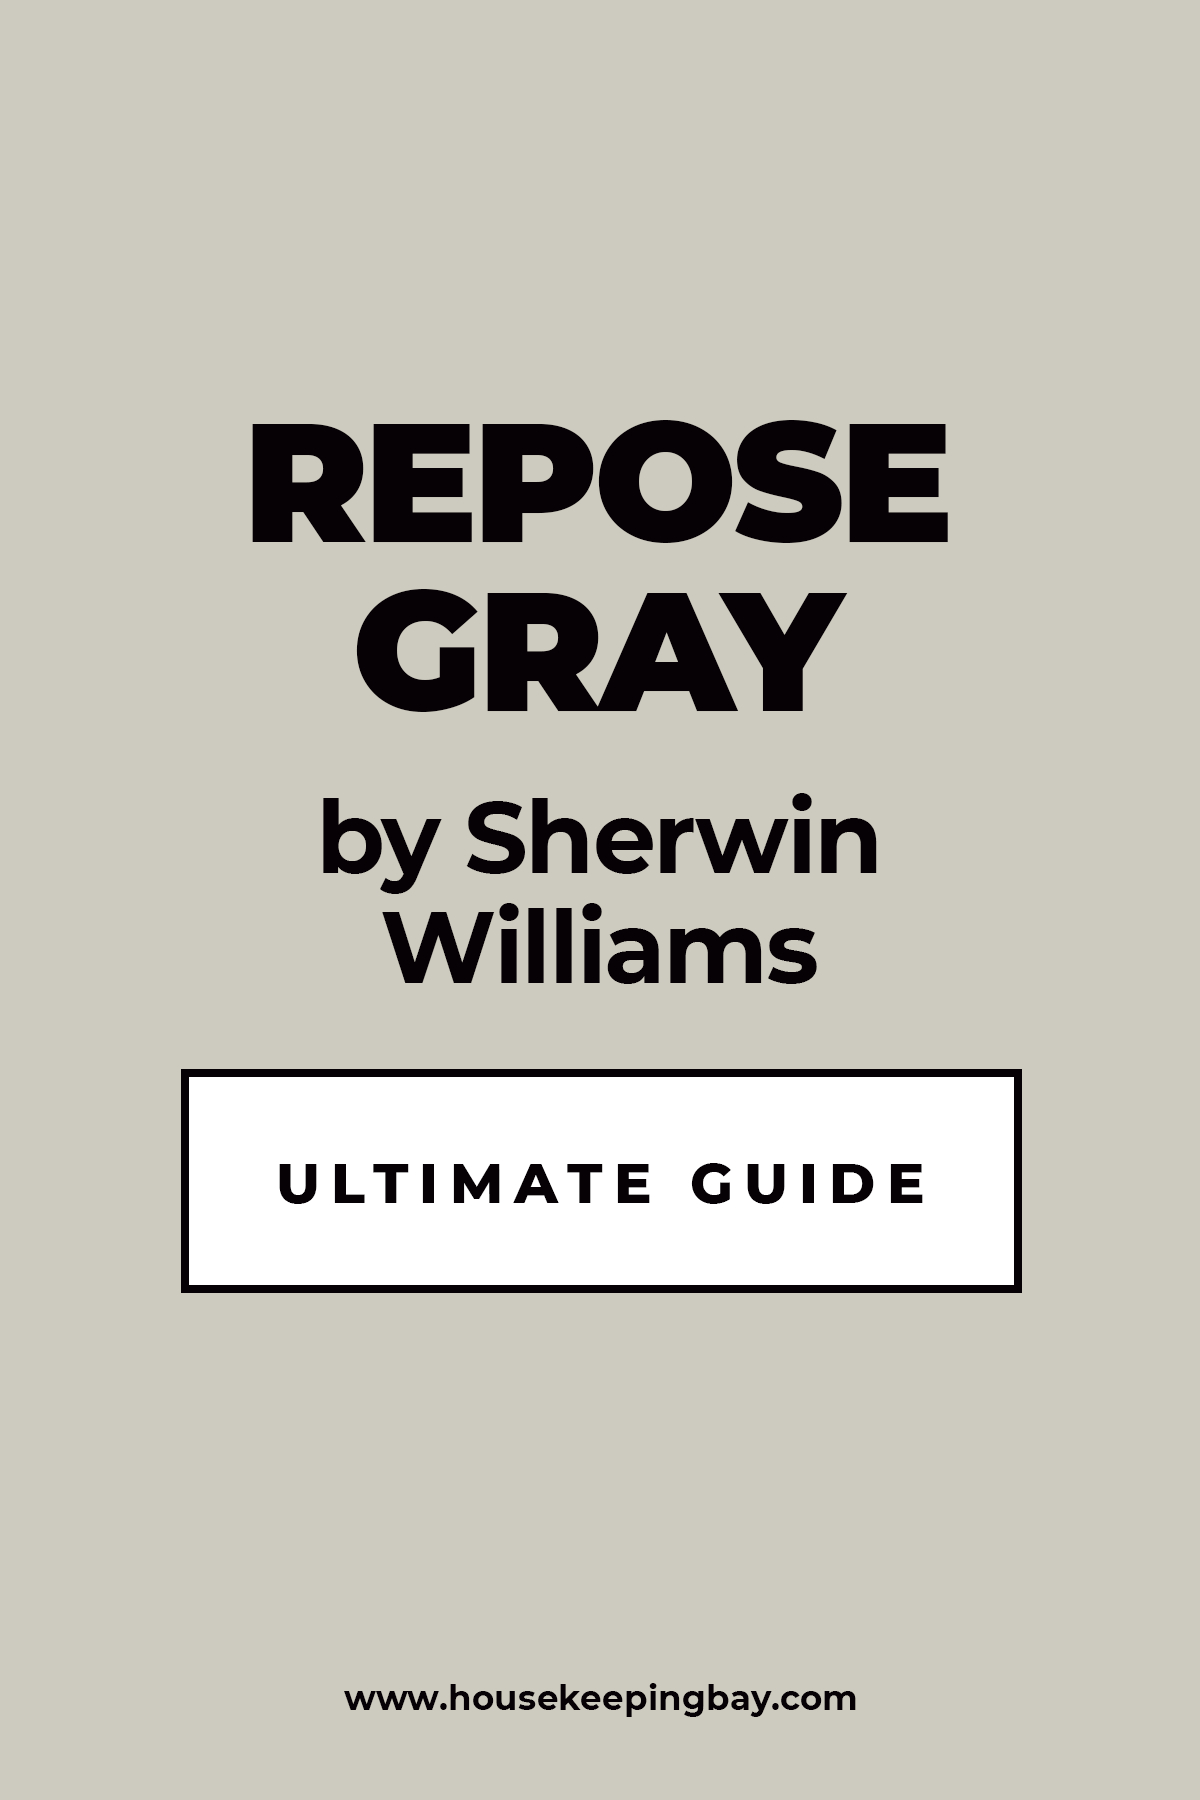 Repose Gray by Sherwin Williams ULTIMATE GUIDE